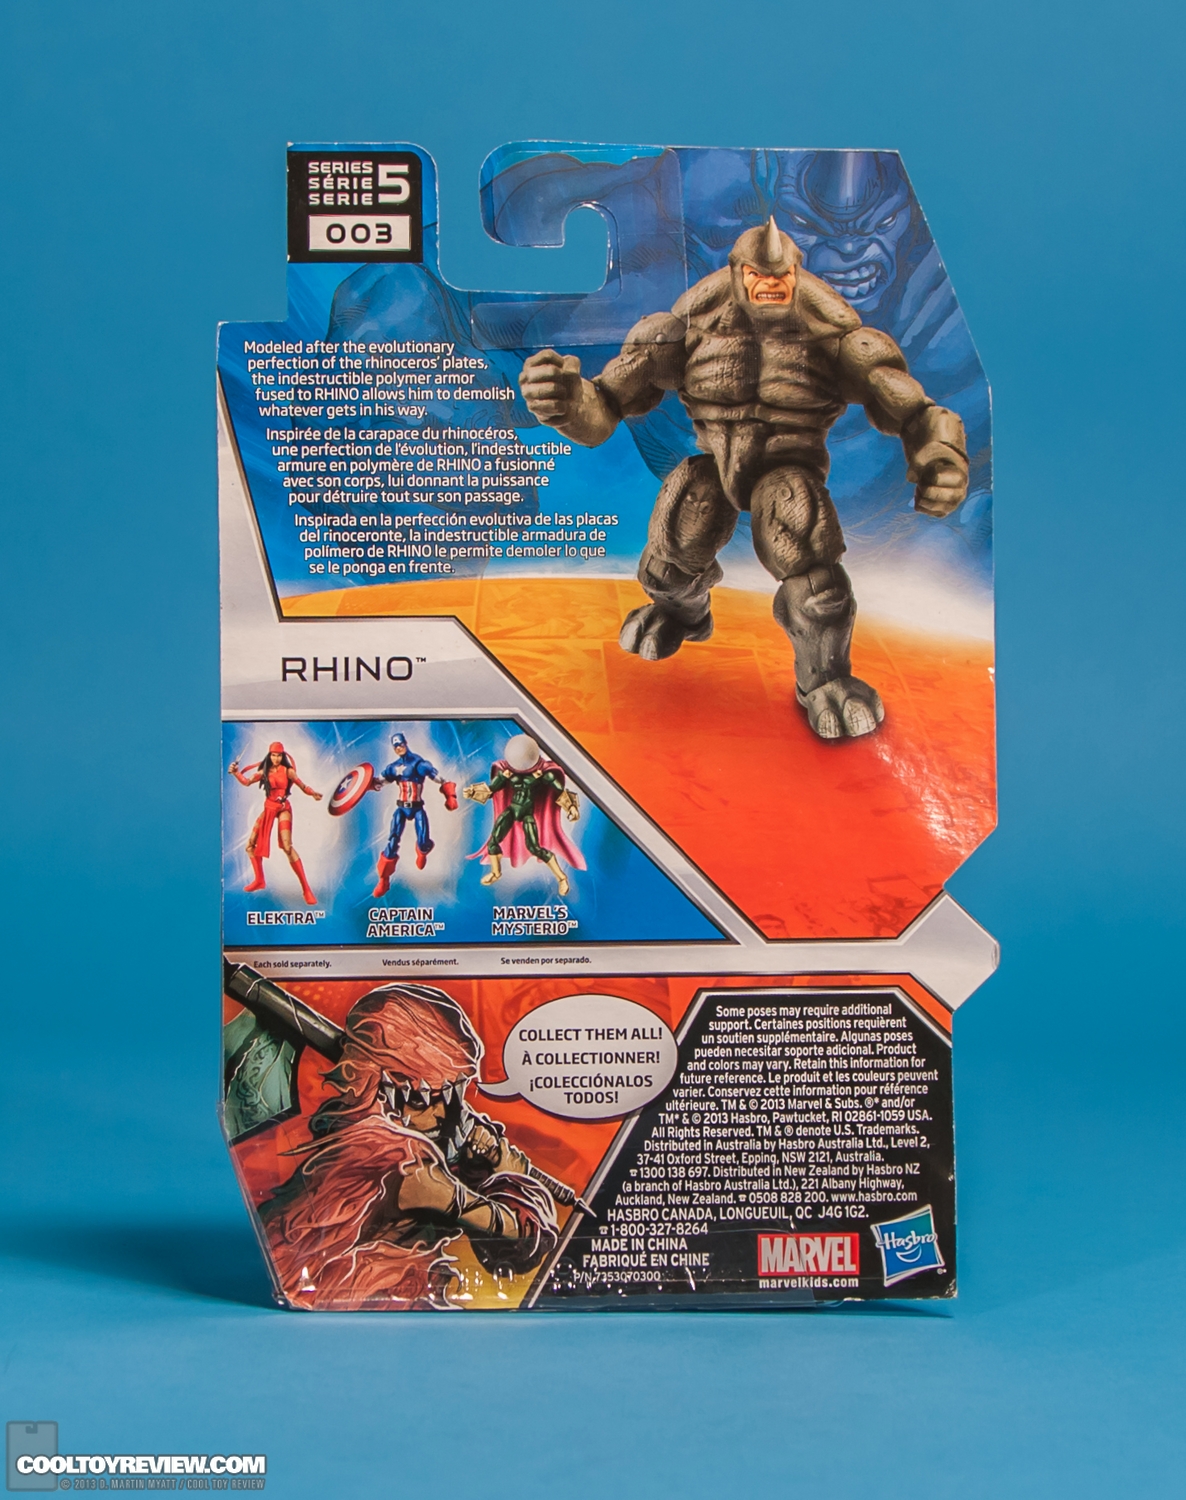 Series-5-03-Rhino-Marvel-Universe-Hasbro-2013-014.jpg